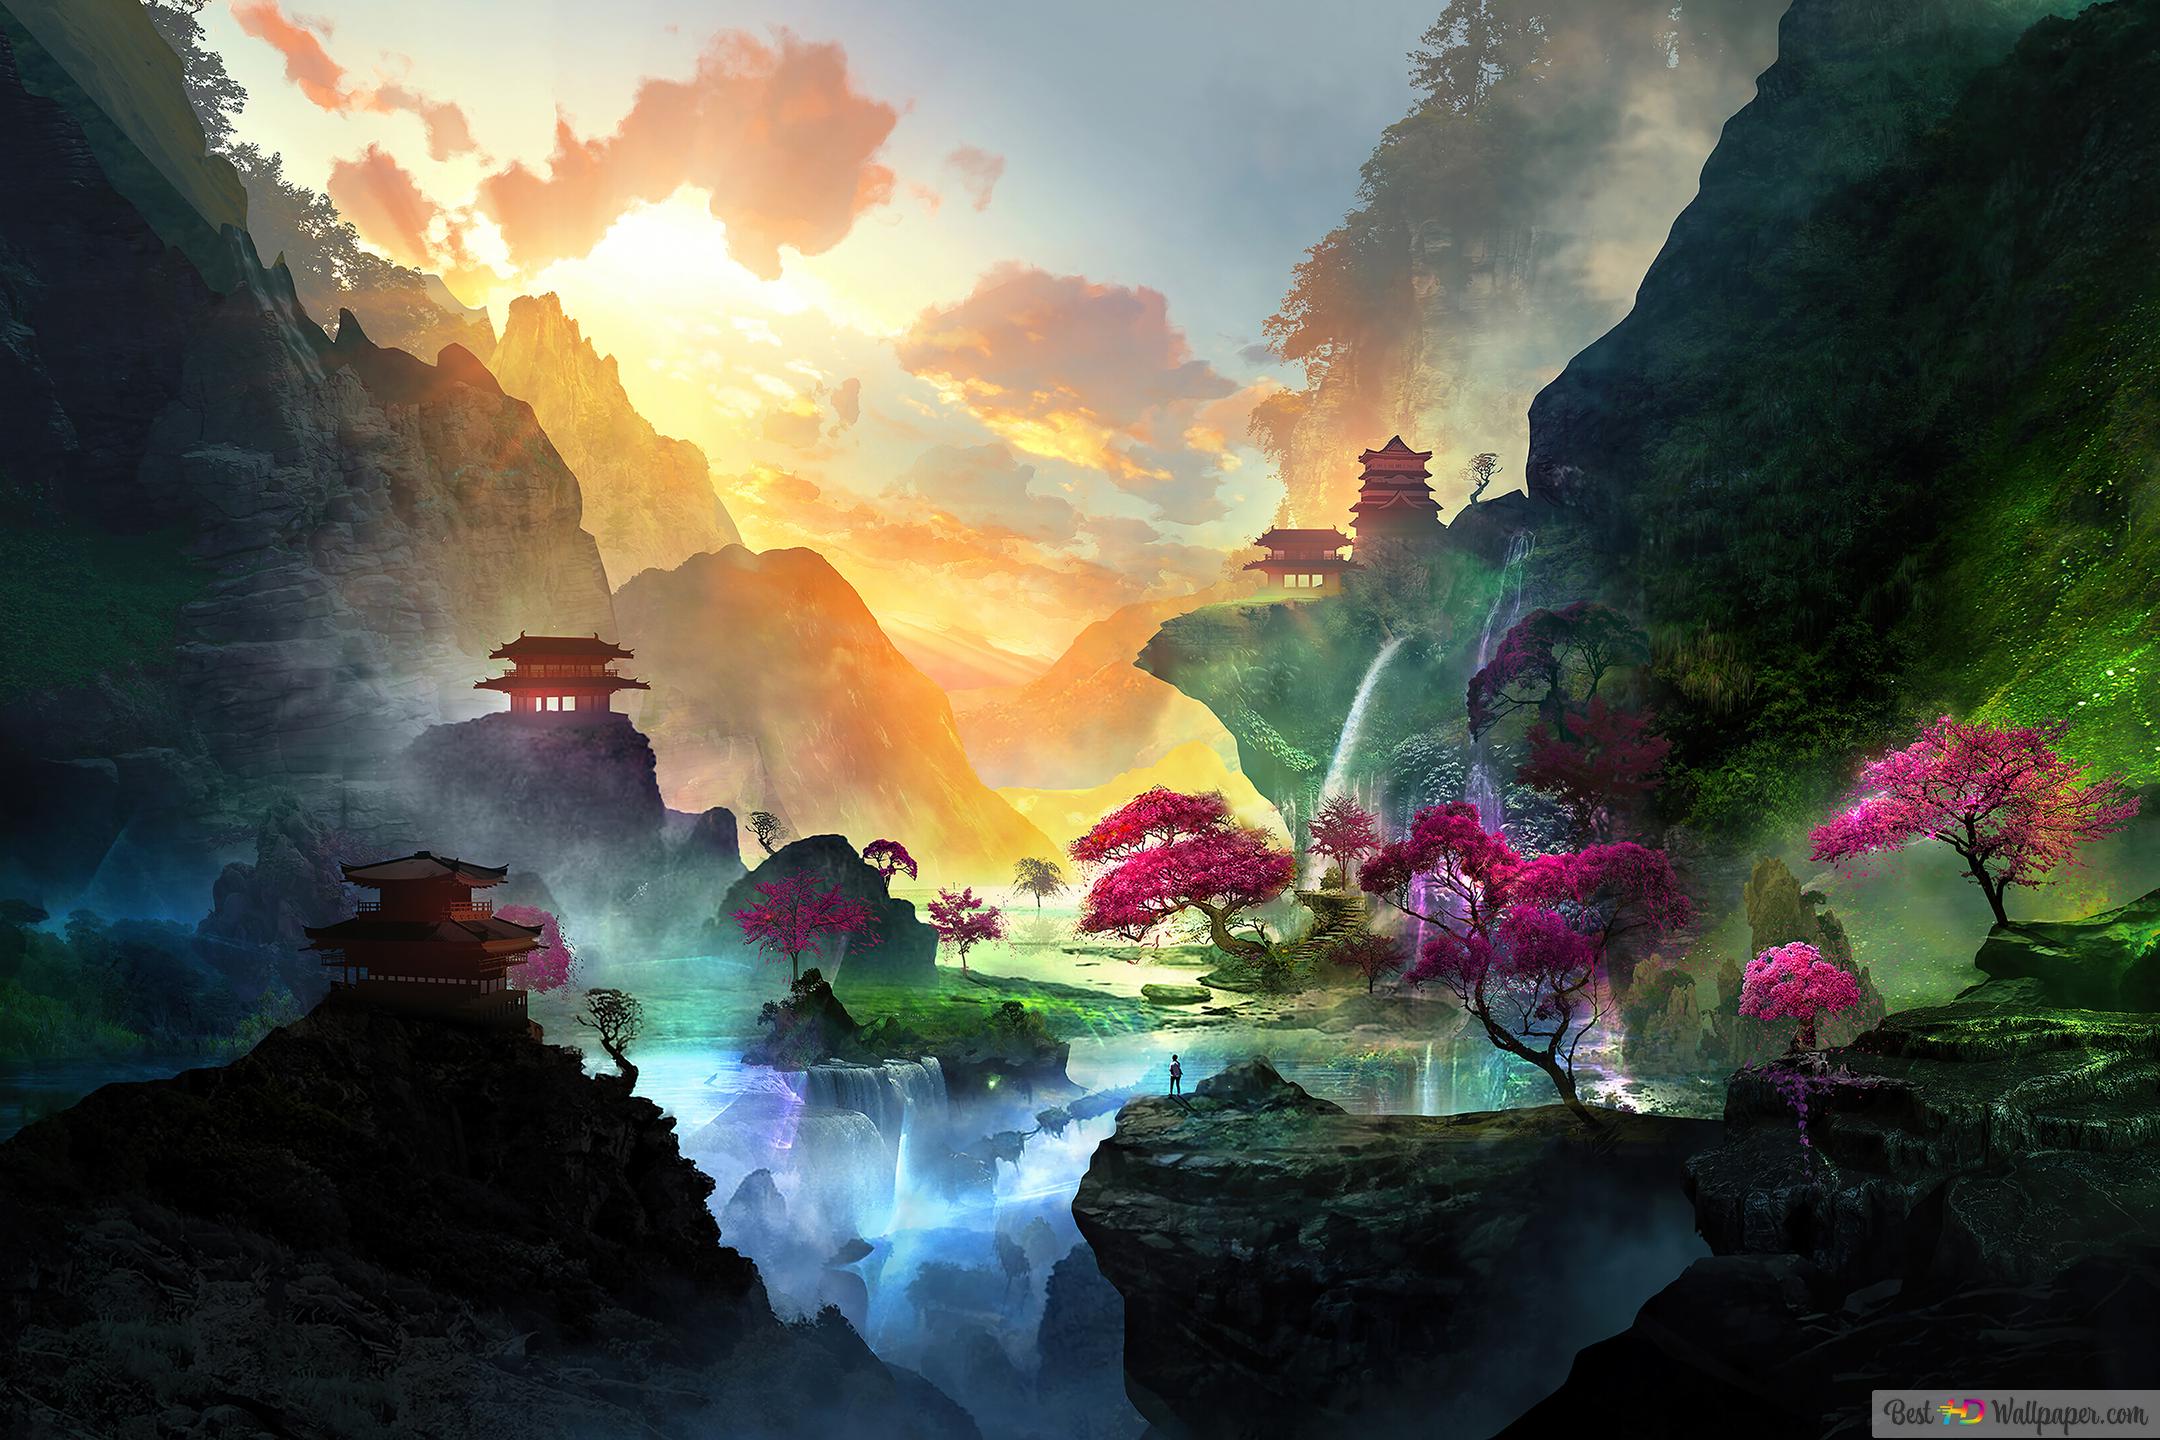 Fantasy Forest Mountains 4K wallpaper download